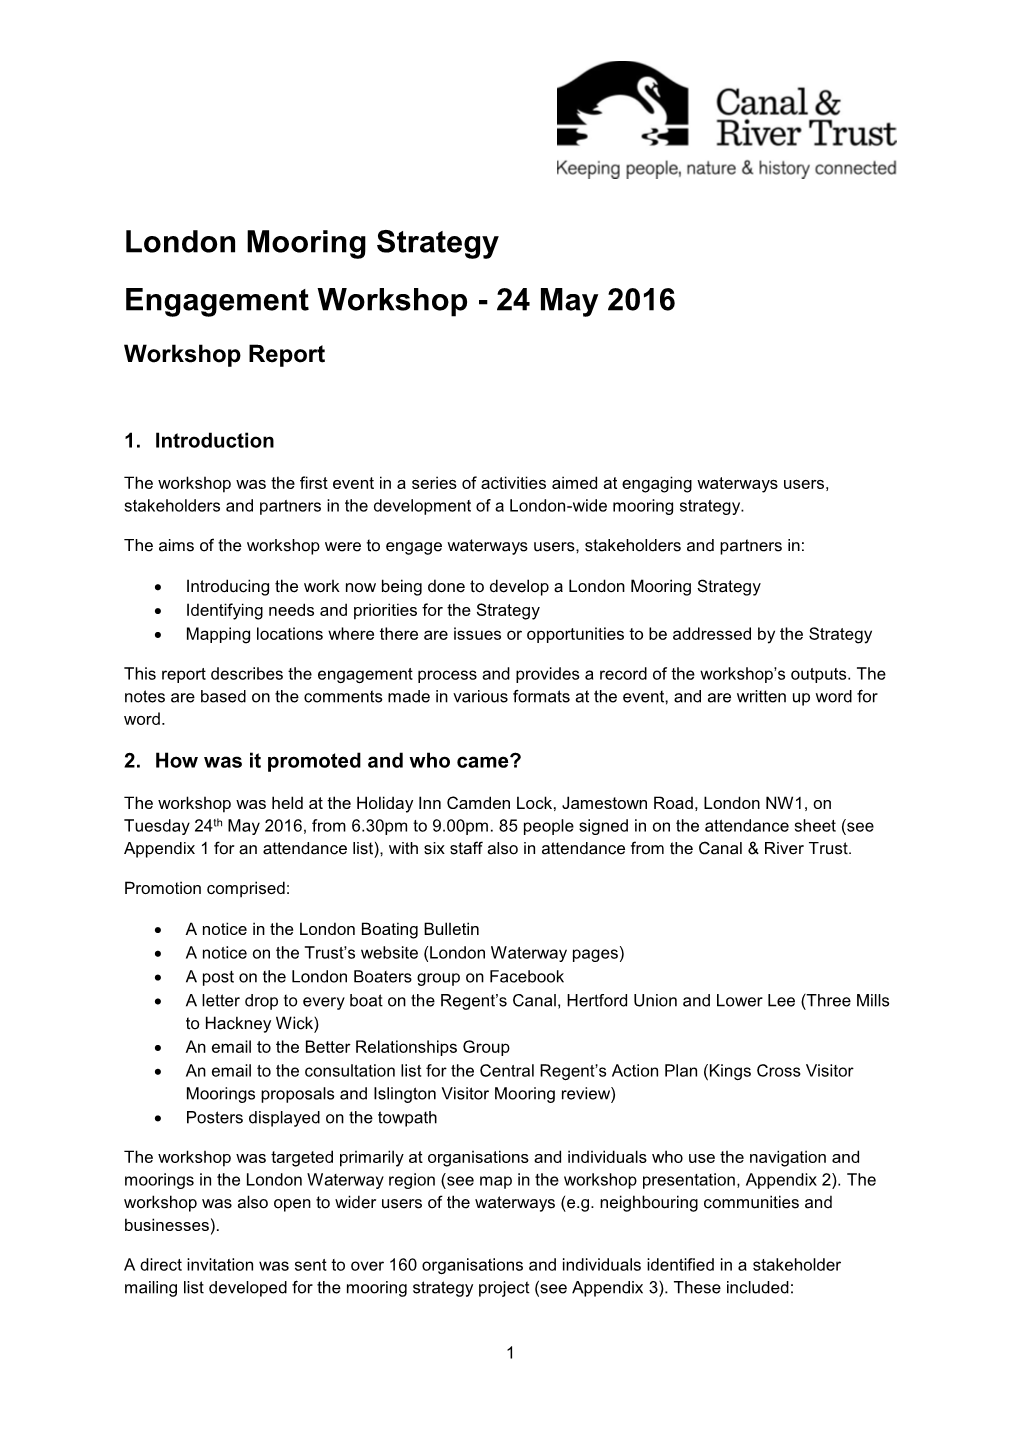 London Mooring Strategy Engagement Workshop - 24 May 2016